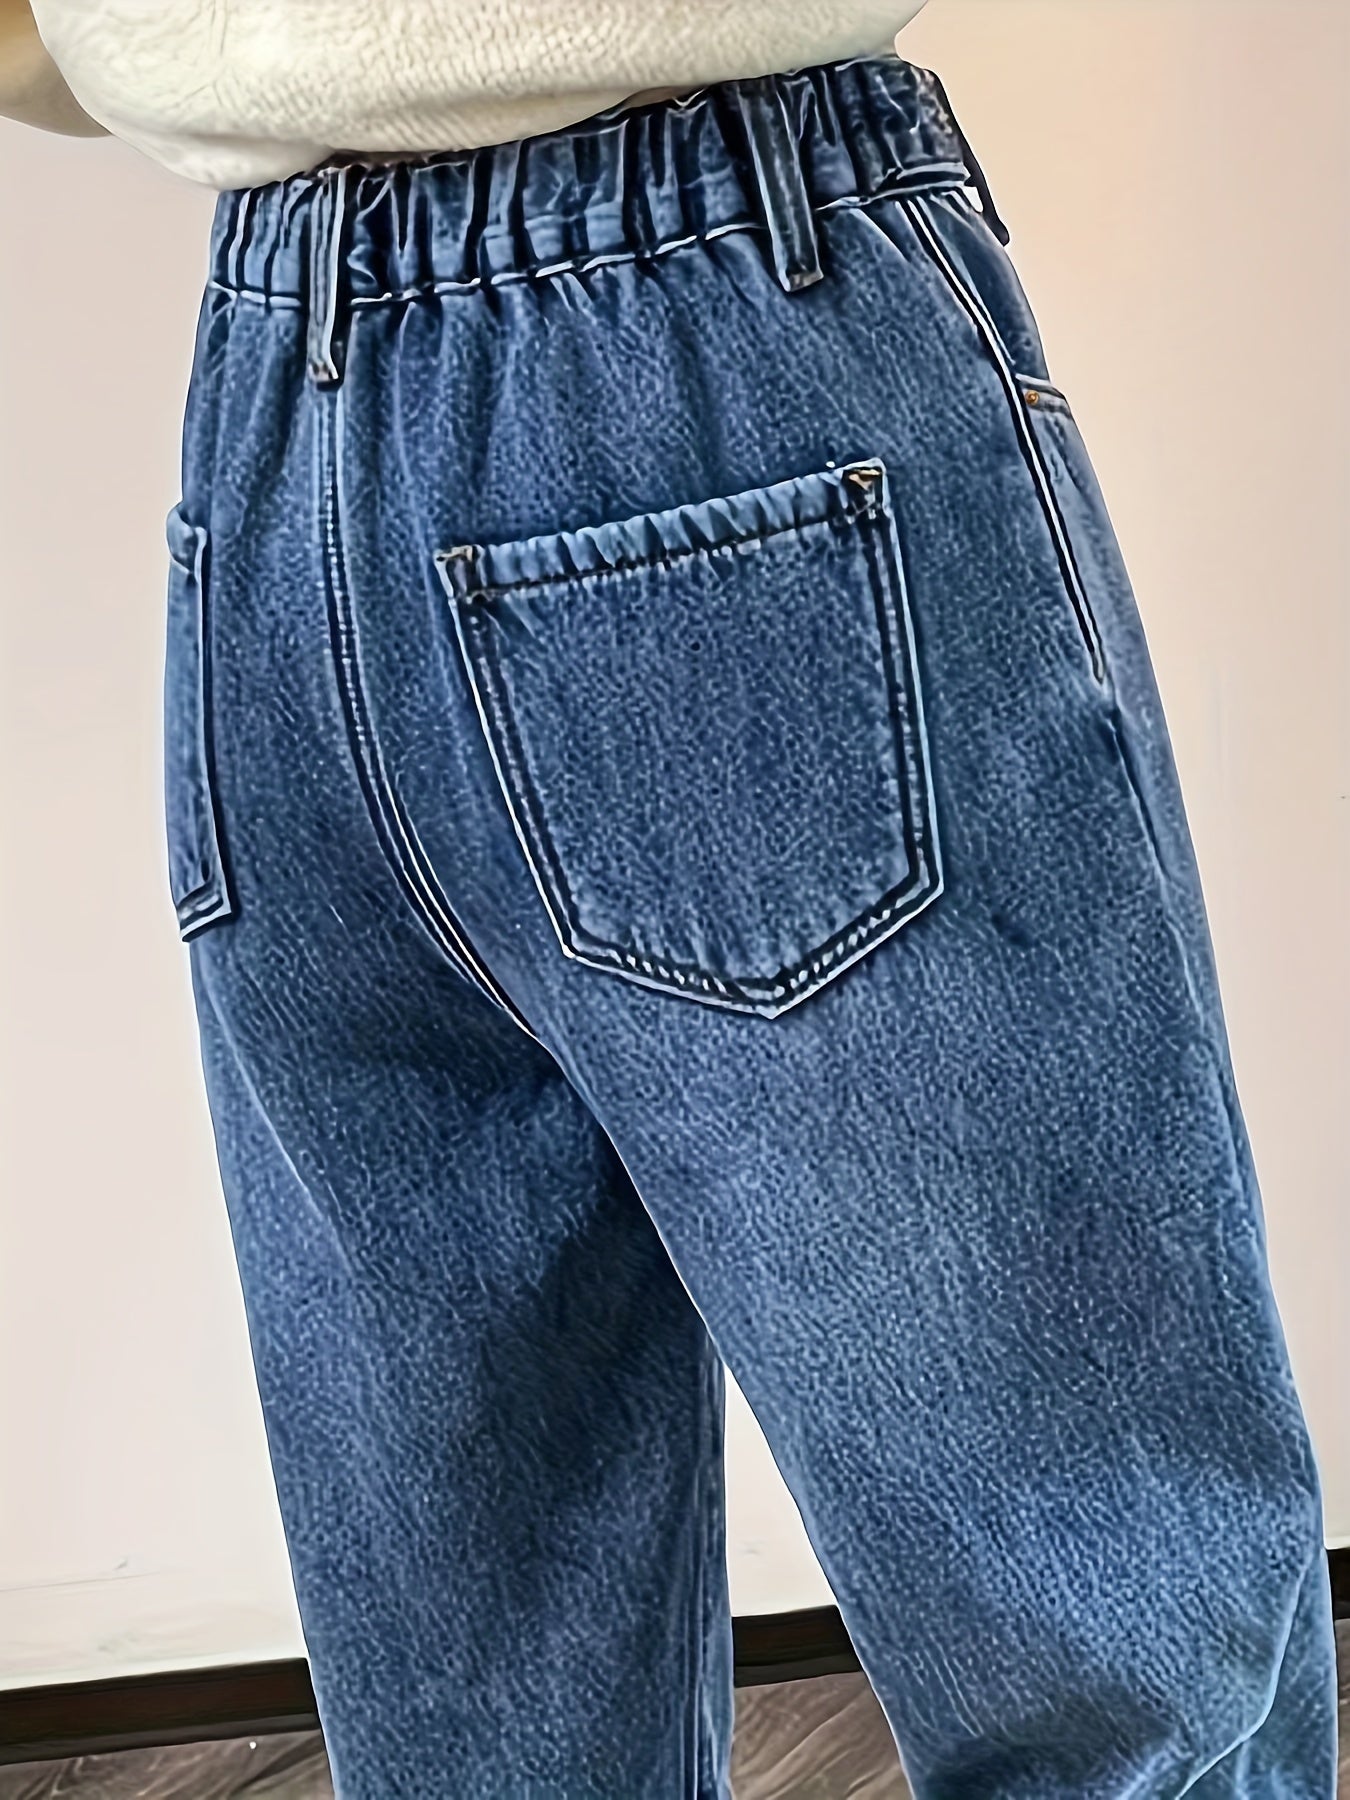 Antmvs High Waist Versatile Tapered Jeans, Fleece Liner Keep Warm Casual Mom Jeans, Women's Denim Jeans & Clothing